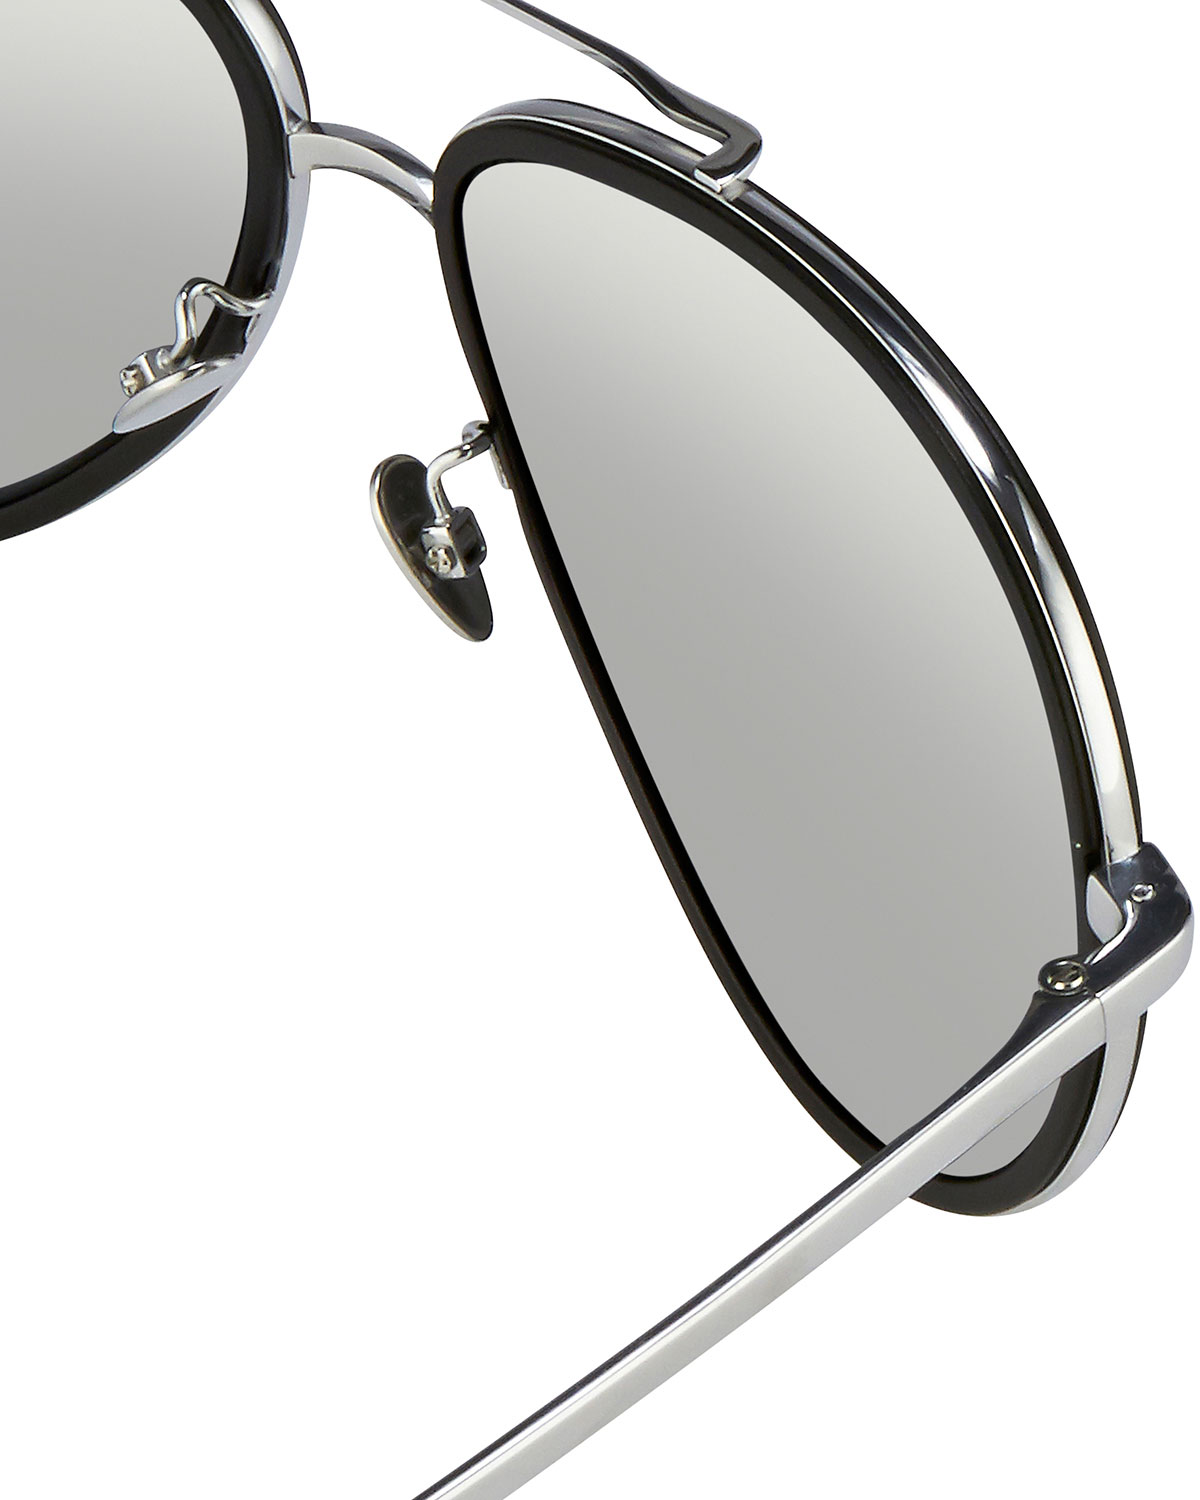 Two-Tone Aviator Sunglasses, White Gold/Platinum